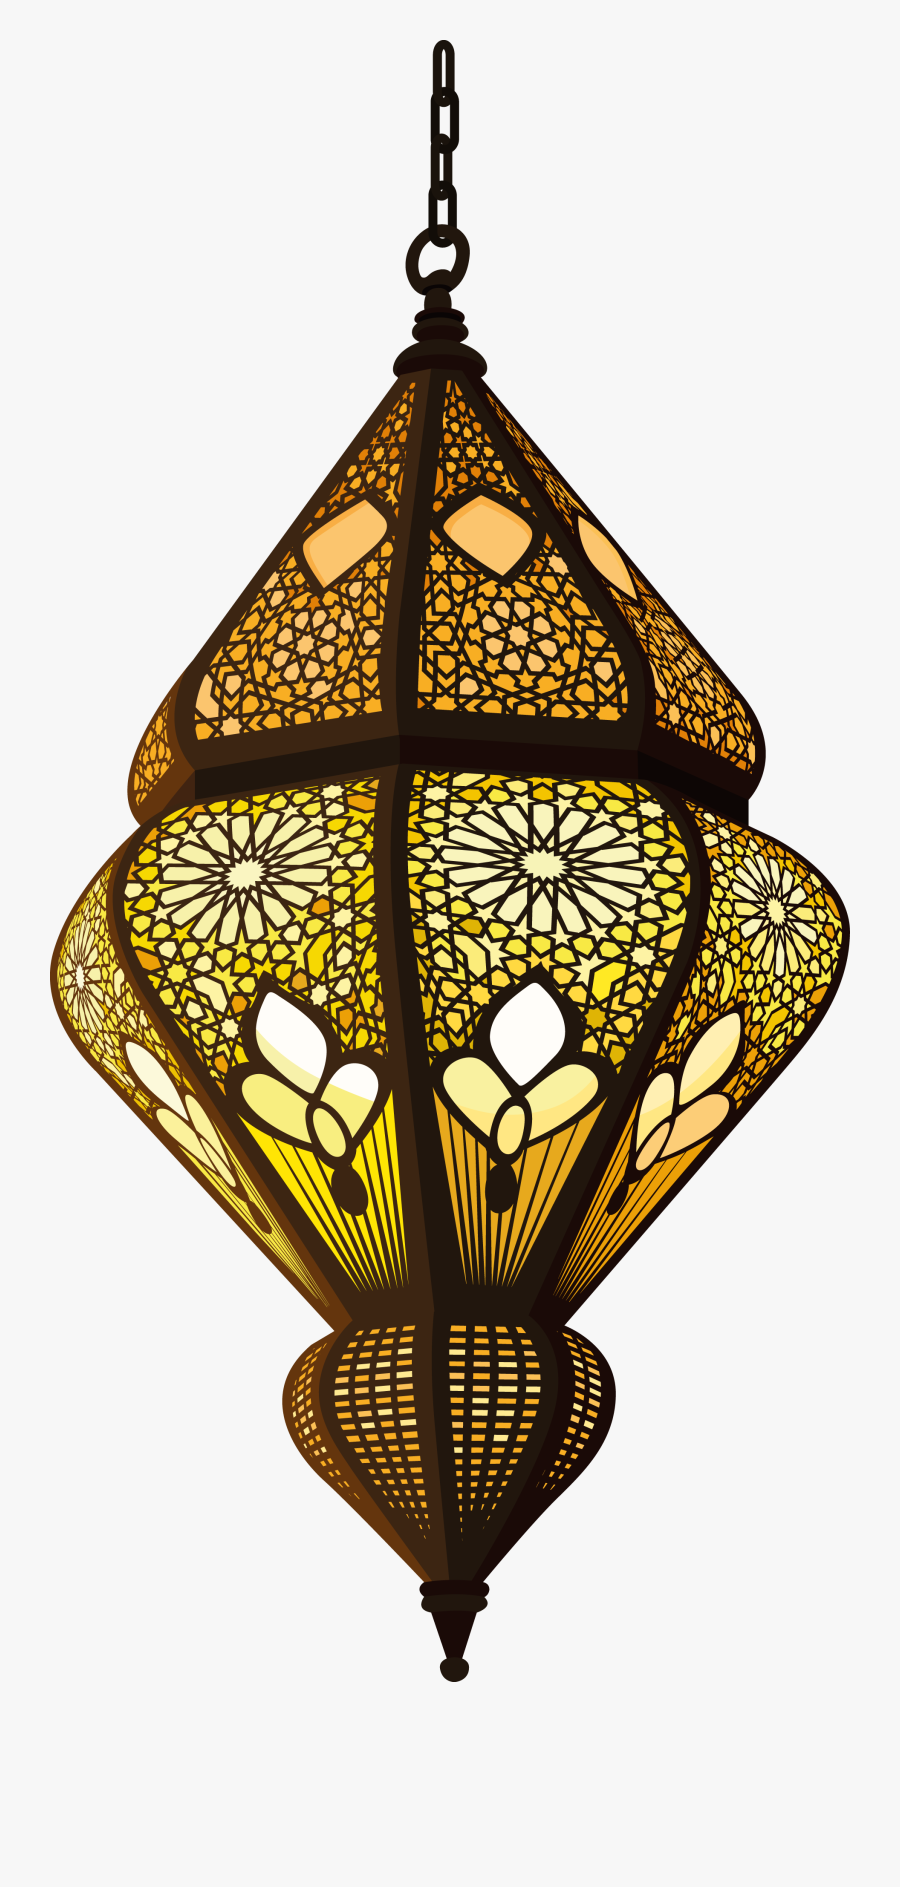 Chandelier - Islamic Lantern Png, Transparent Clipart